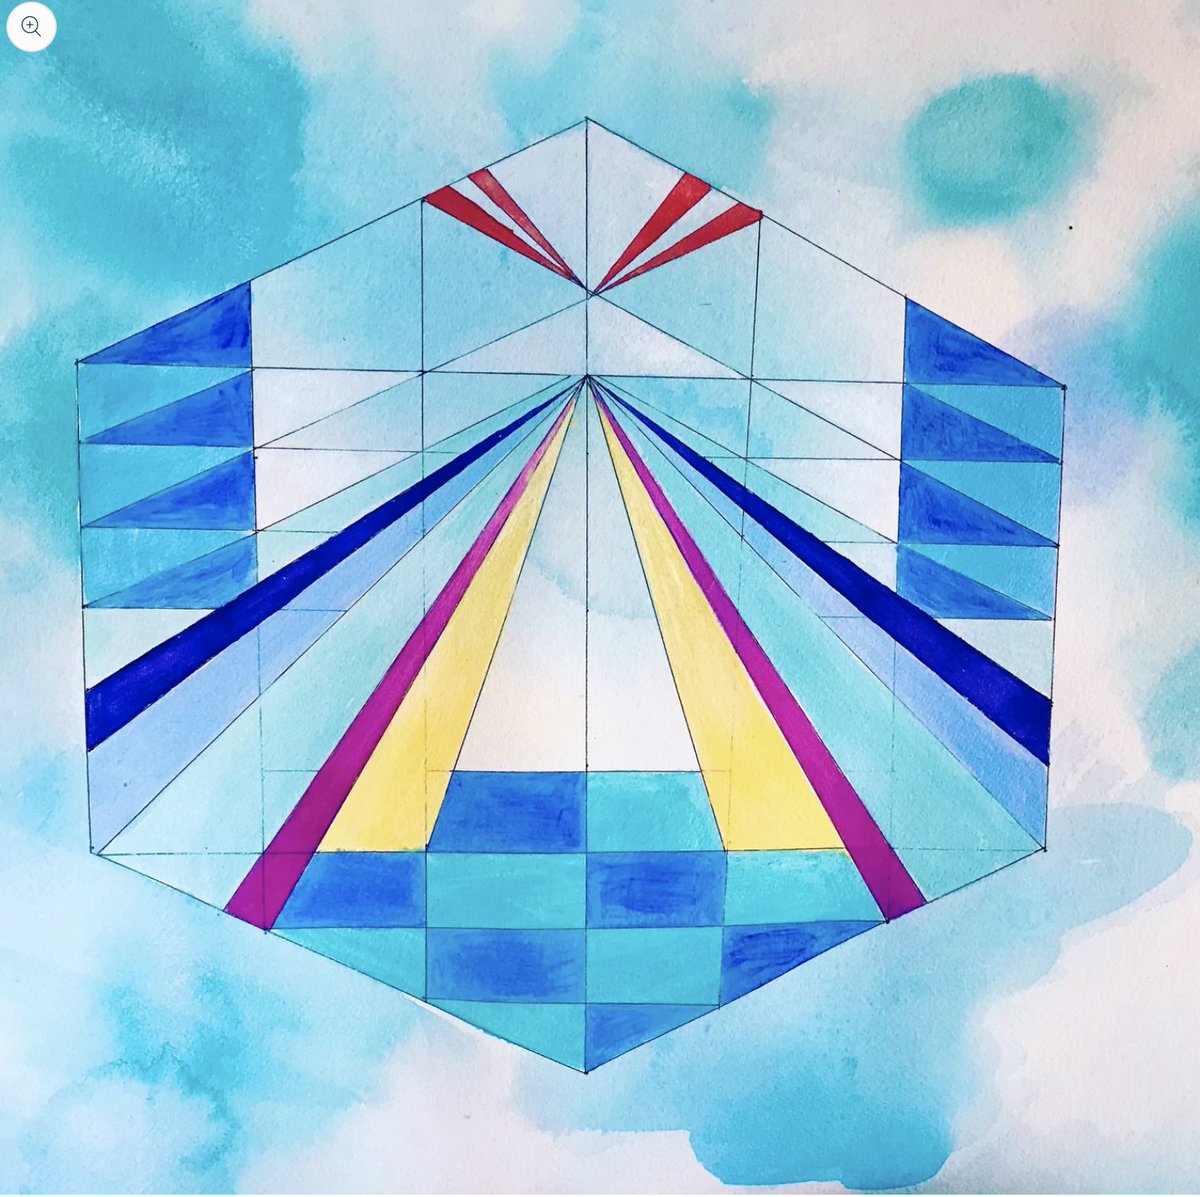 'Blue Lodge' 
Watercolor 20x20' & NFT
$3,700.00 USD
on Shopify, DM or Studio pickup! 

nfteve.myshopify.com/products/blue-…

#fineartsales #luxurydecor #interiordesign 
#abstractartwork #painitng #worksonpaper #art #alchemy #contemporaryartist #NFTartist #NFTs #digitalassets #investinginart